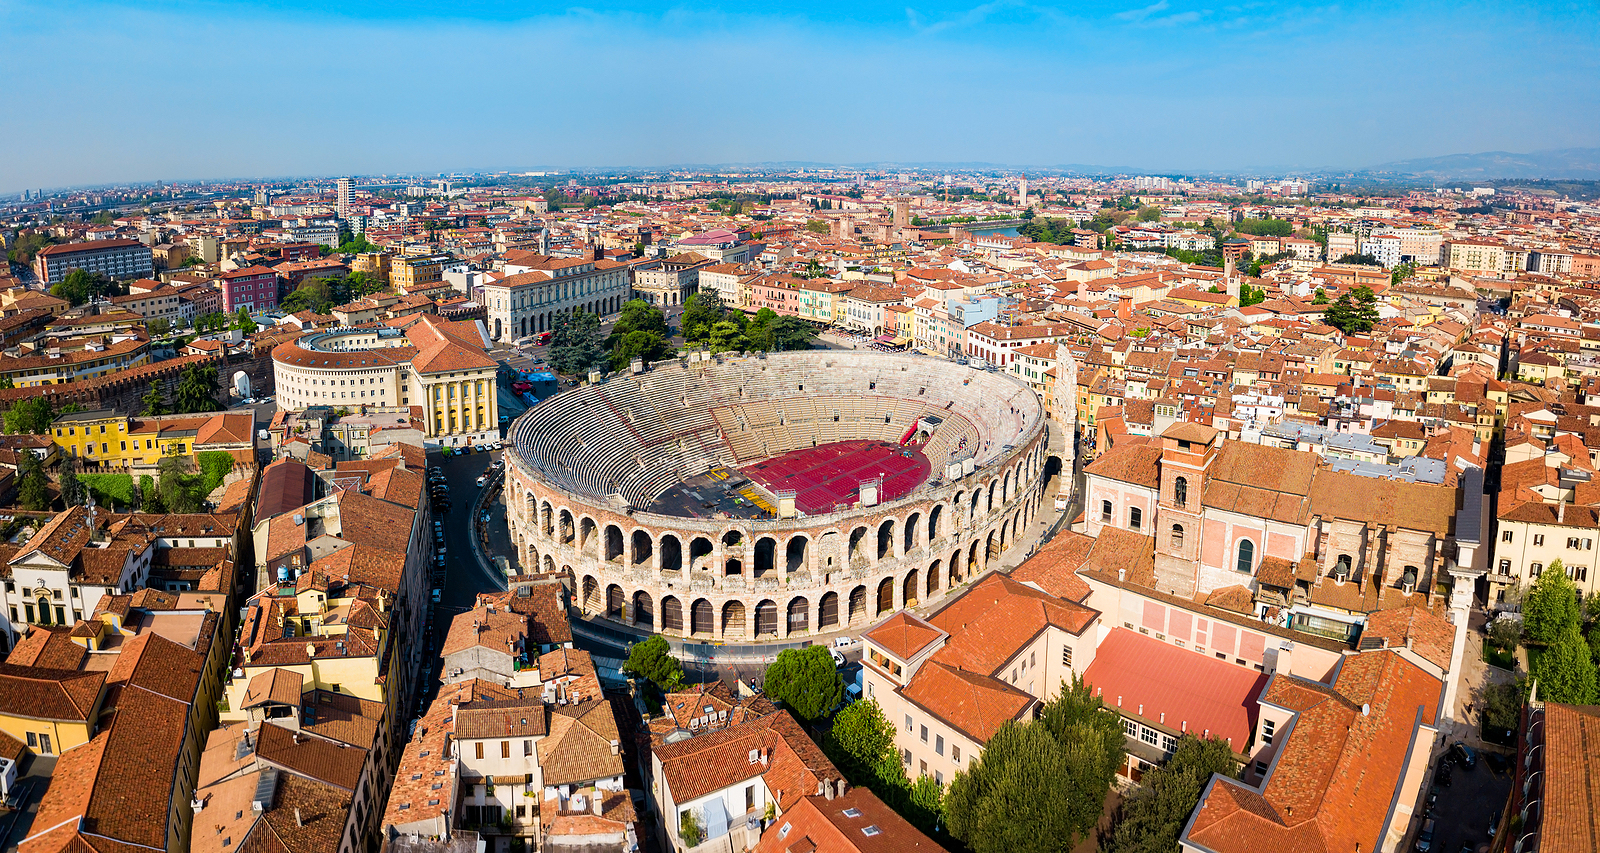 Wonders of Italy: The Verona Arena